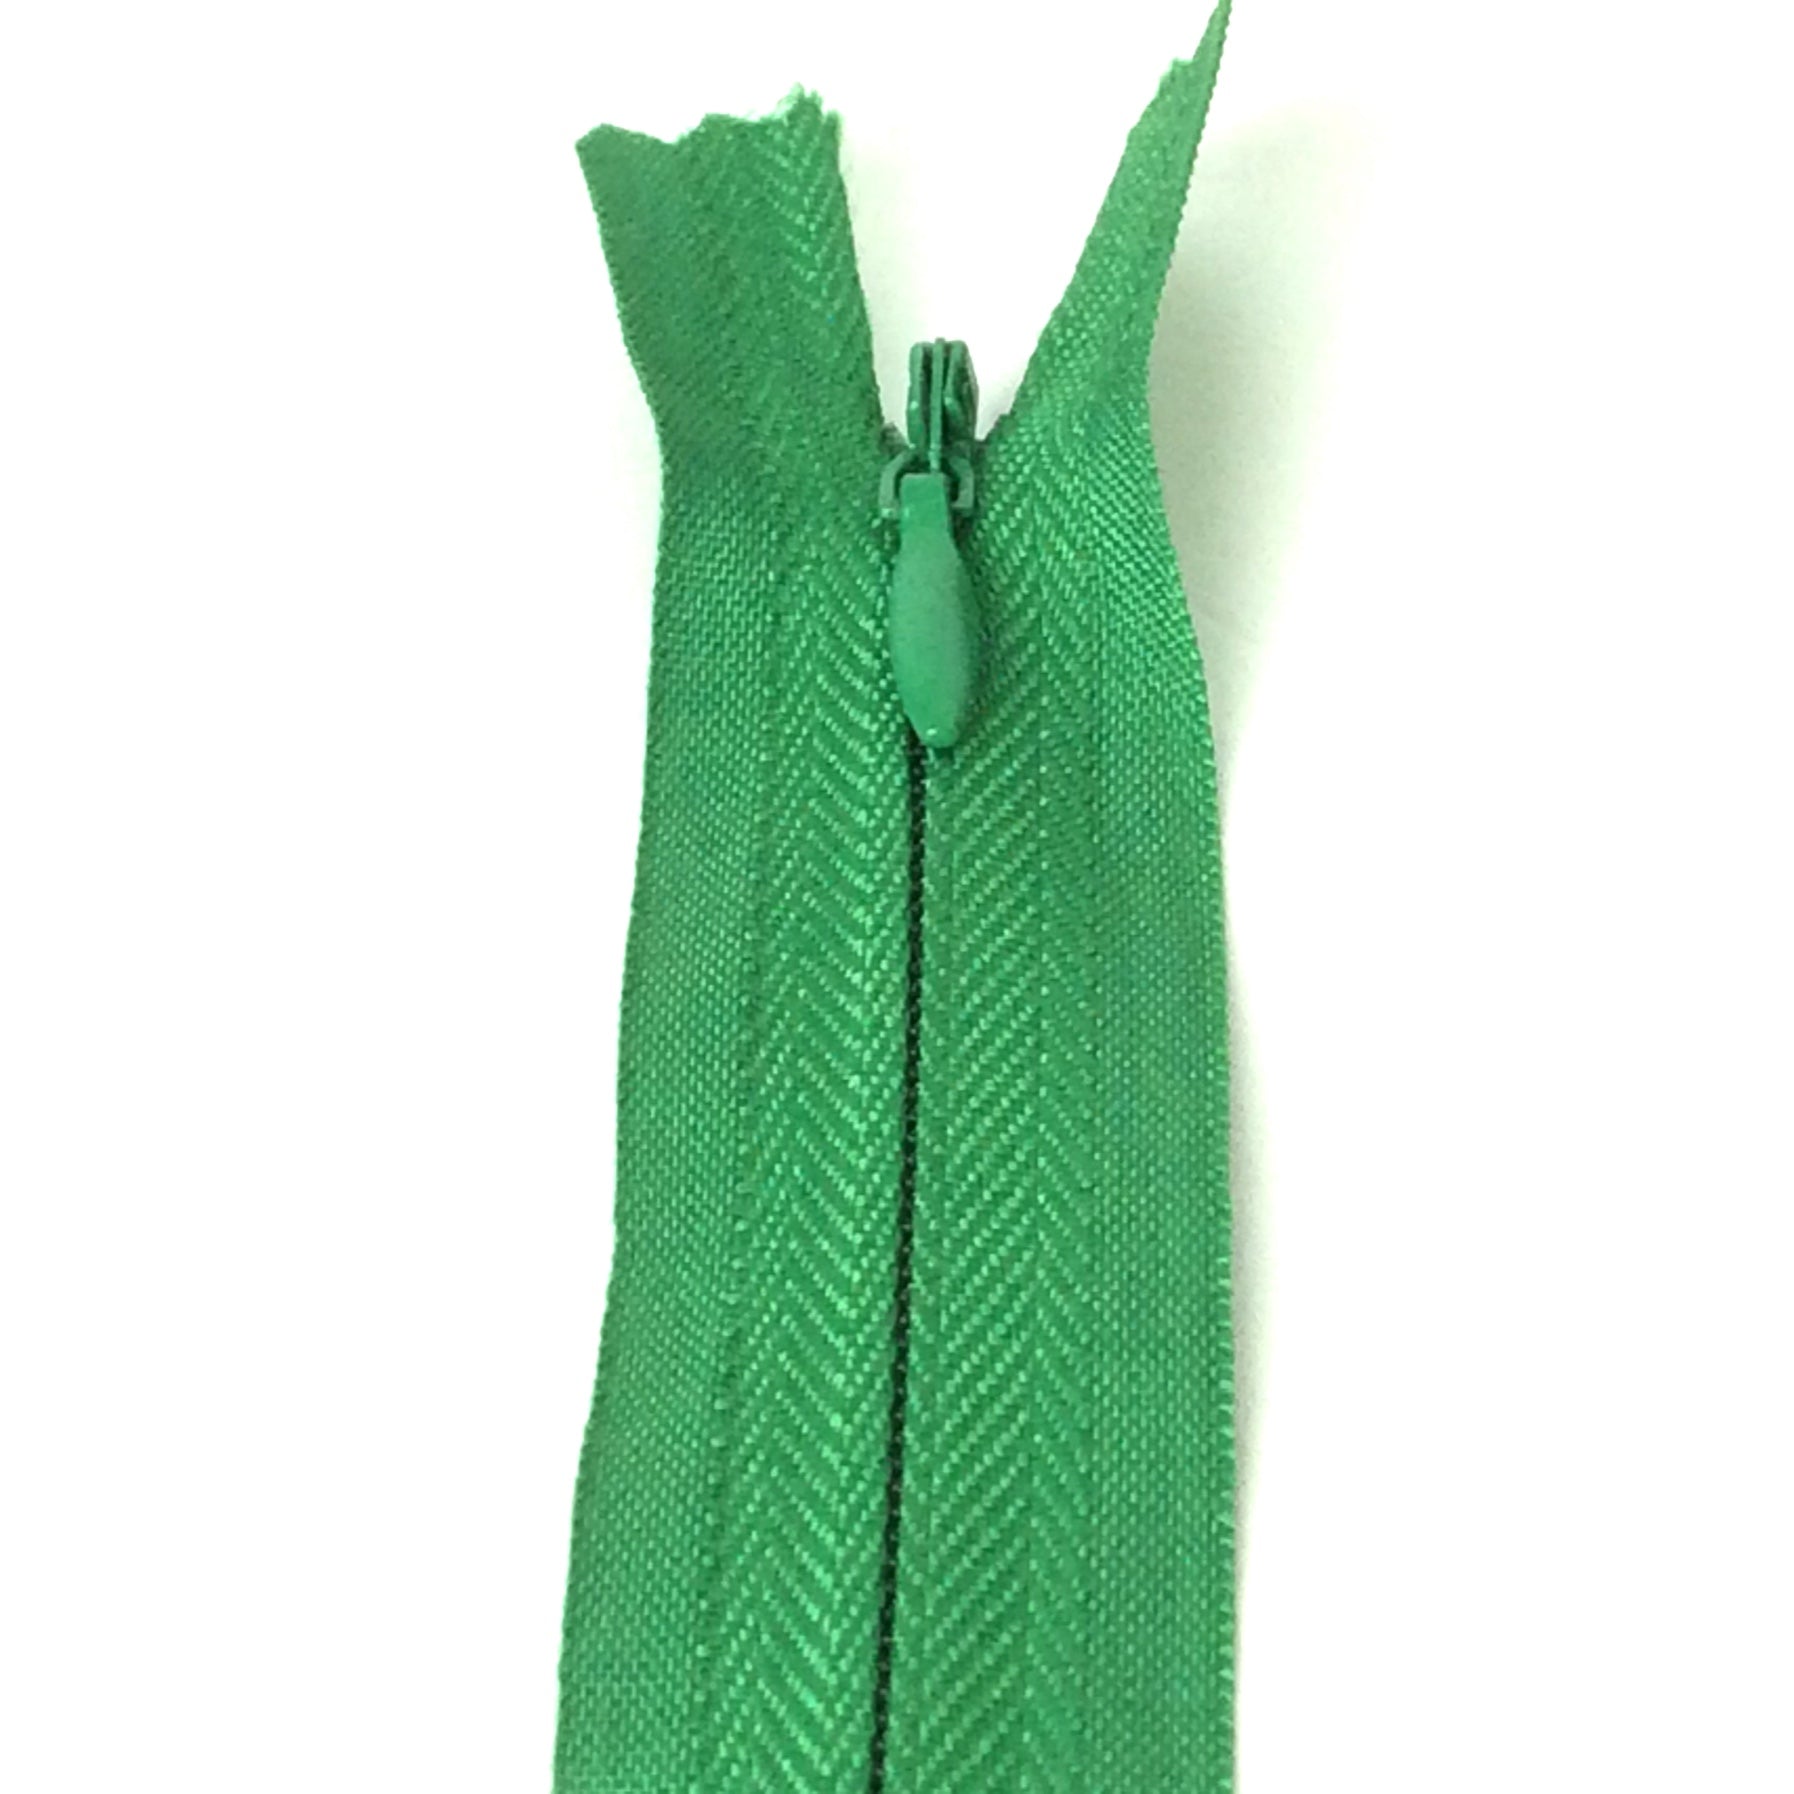 Emerald green invisible zipper